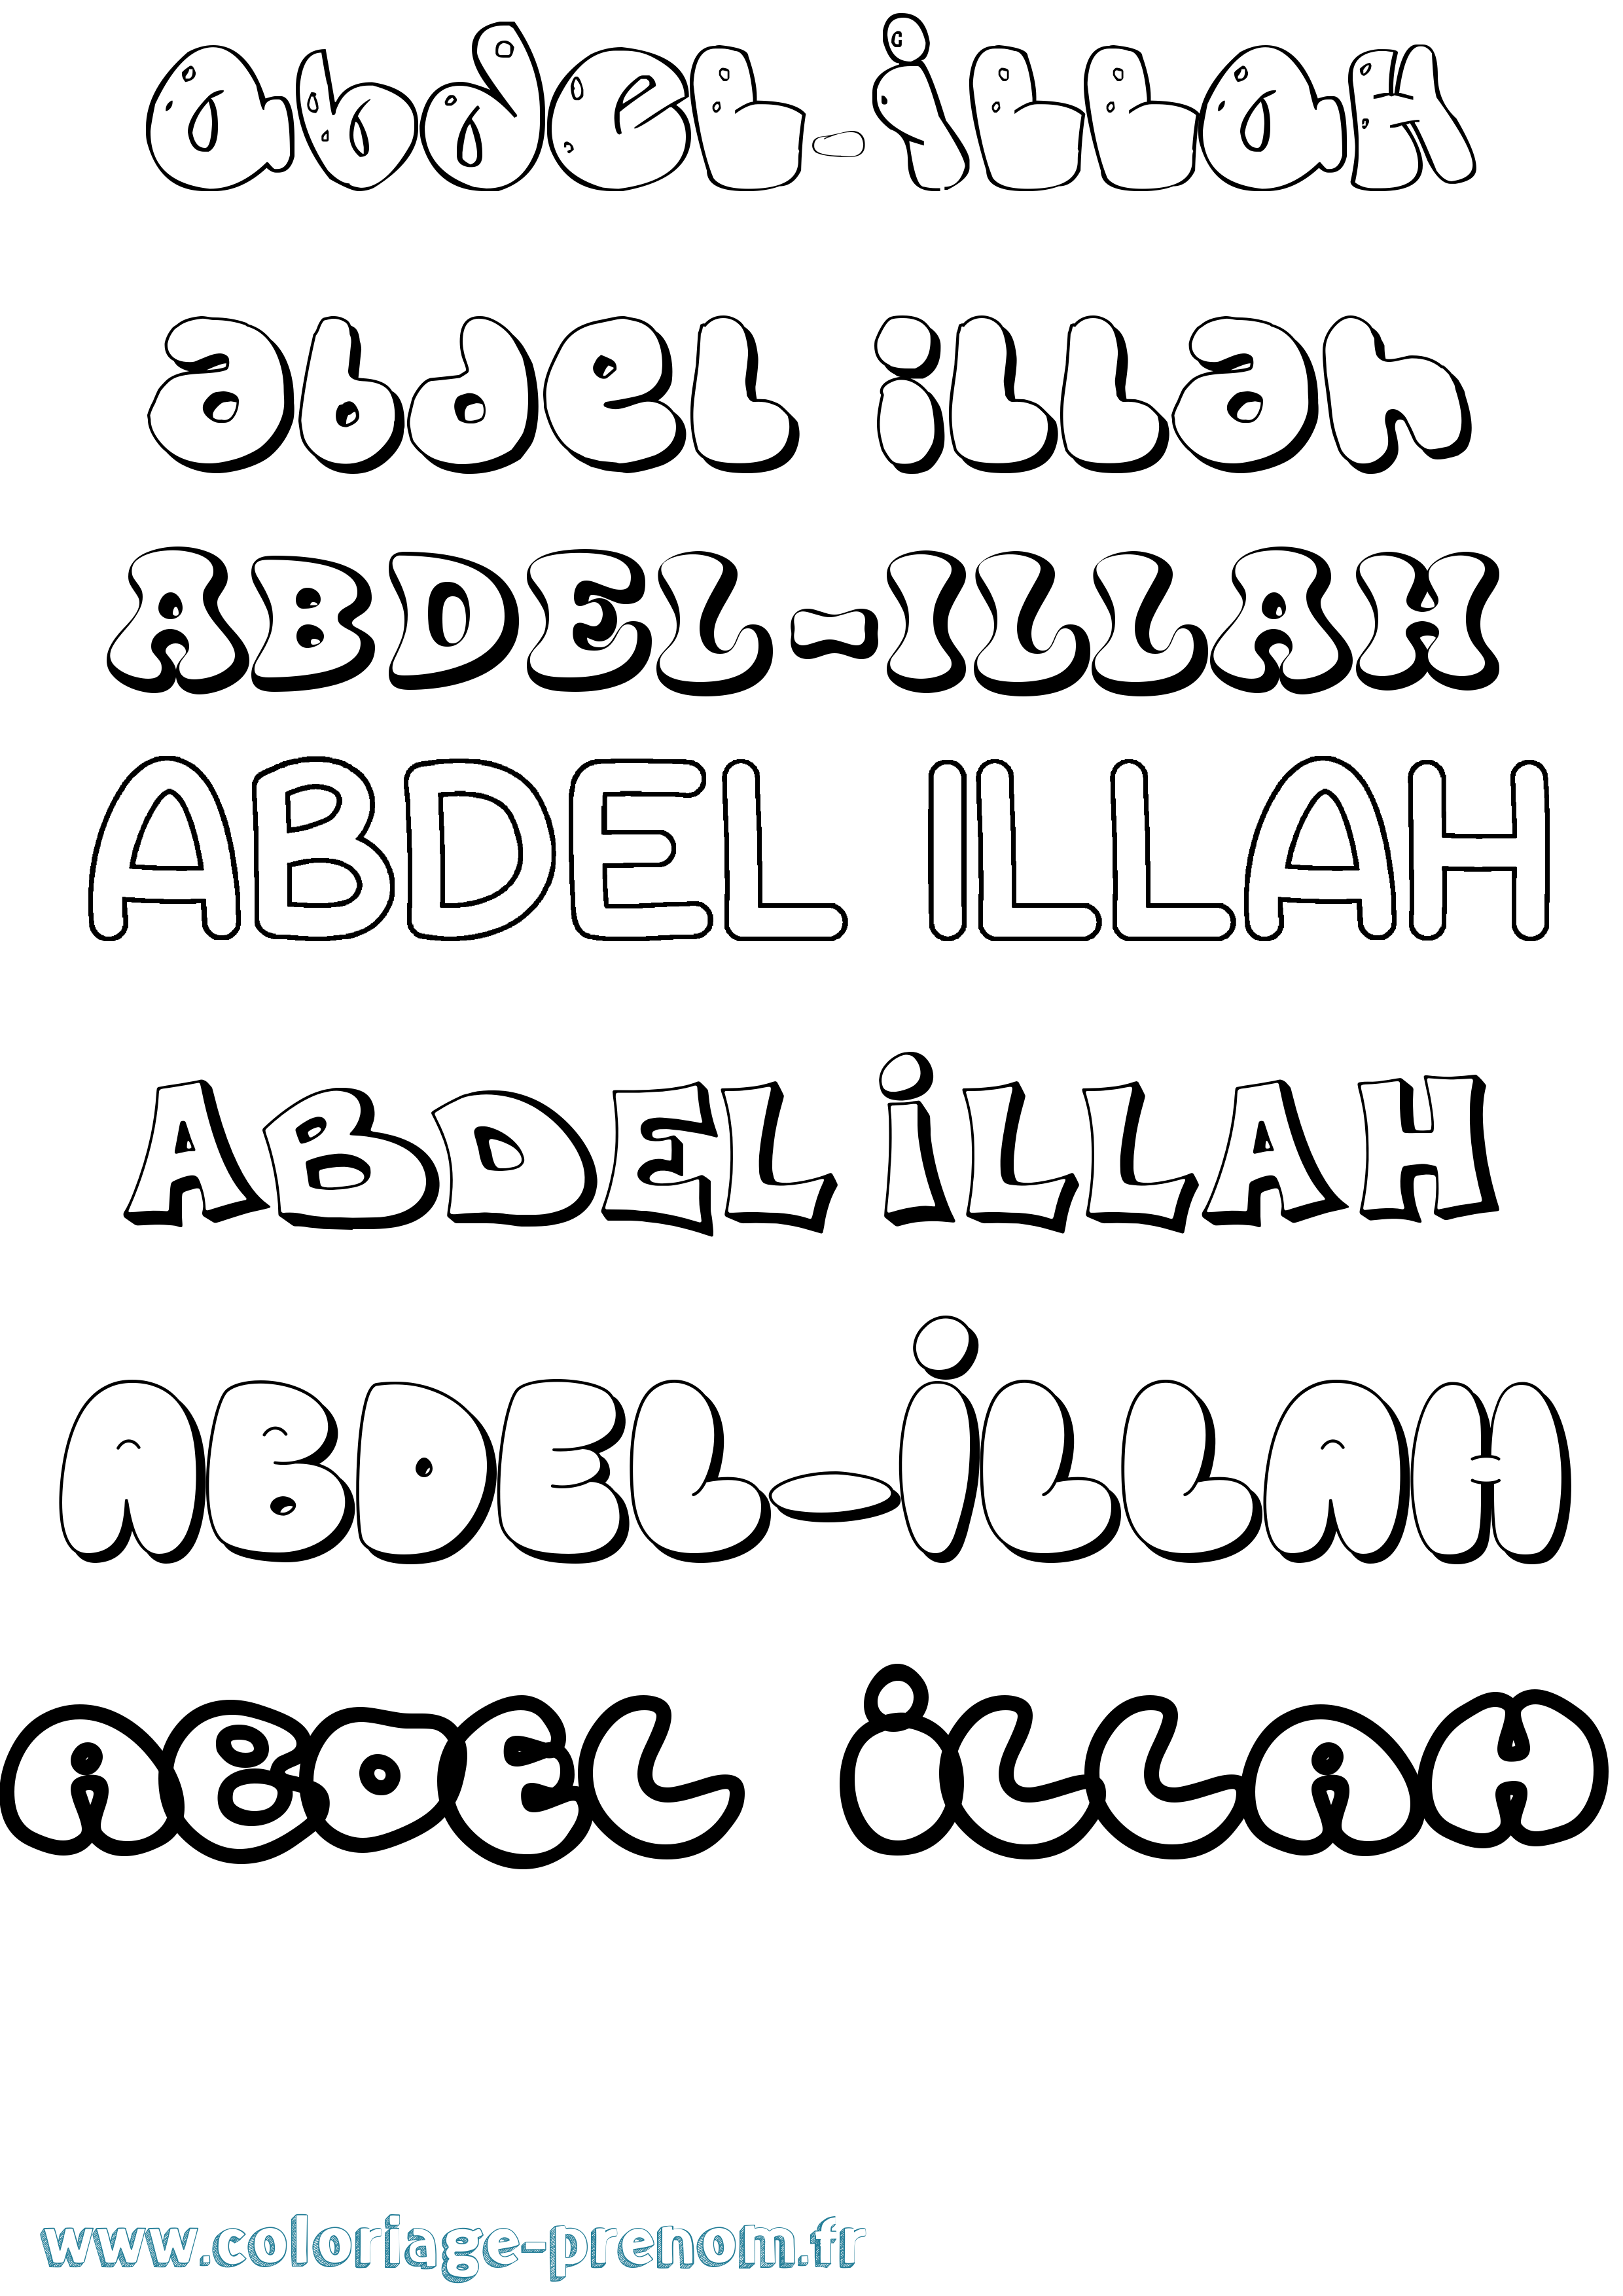 Coloriage prénom Abdel-Illah Bubble